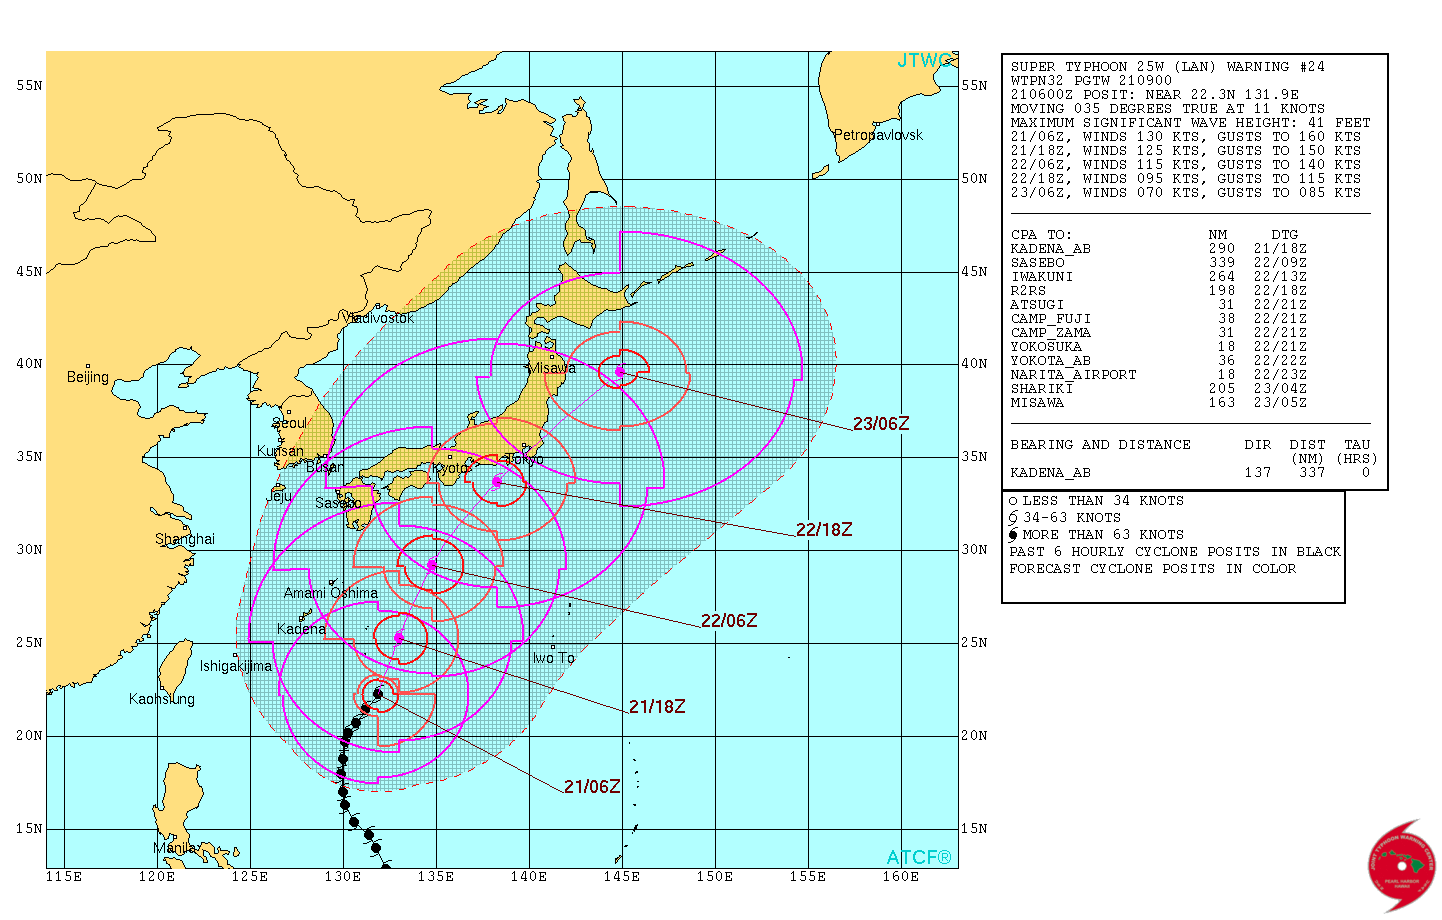 Typhoon Lan forecast track by JTWC at 09:00 UTC on October 21, 2017